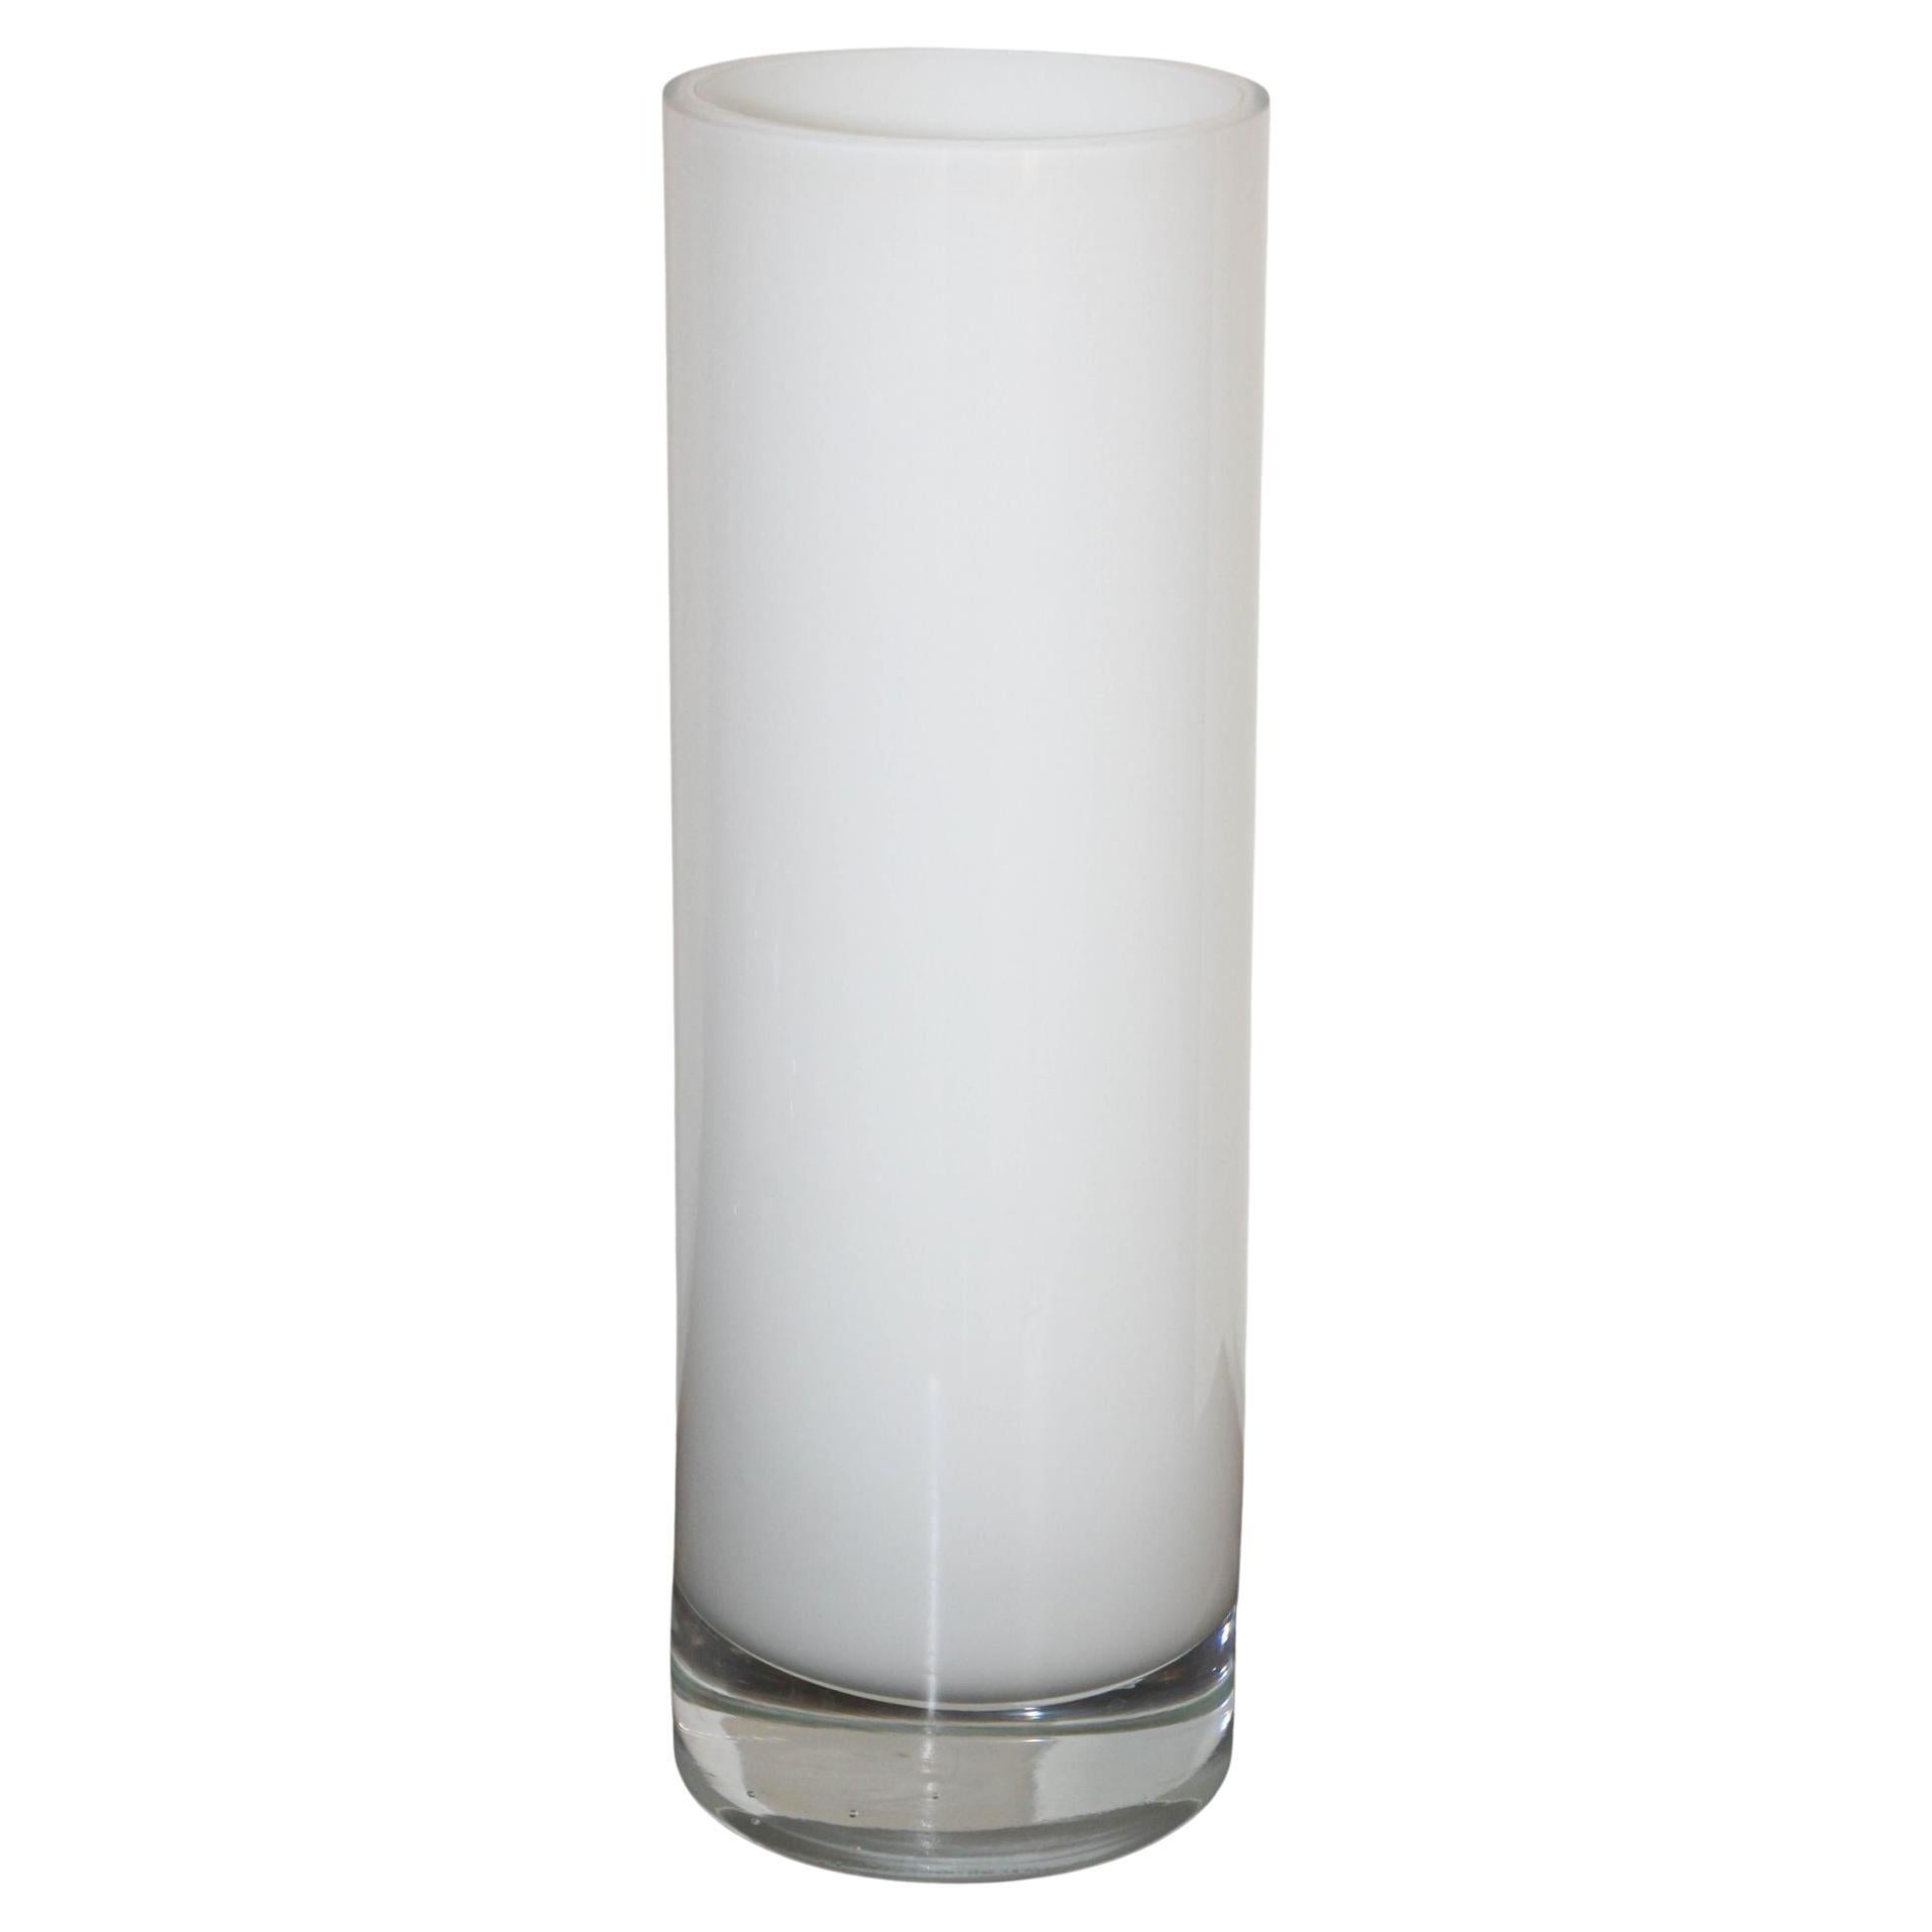 Modernist Minimalist White Glass Flower Vase For Sale